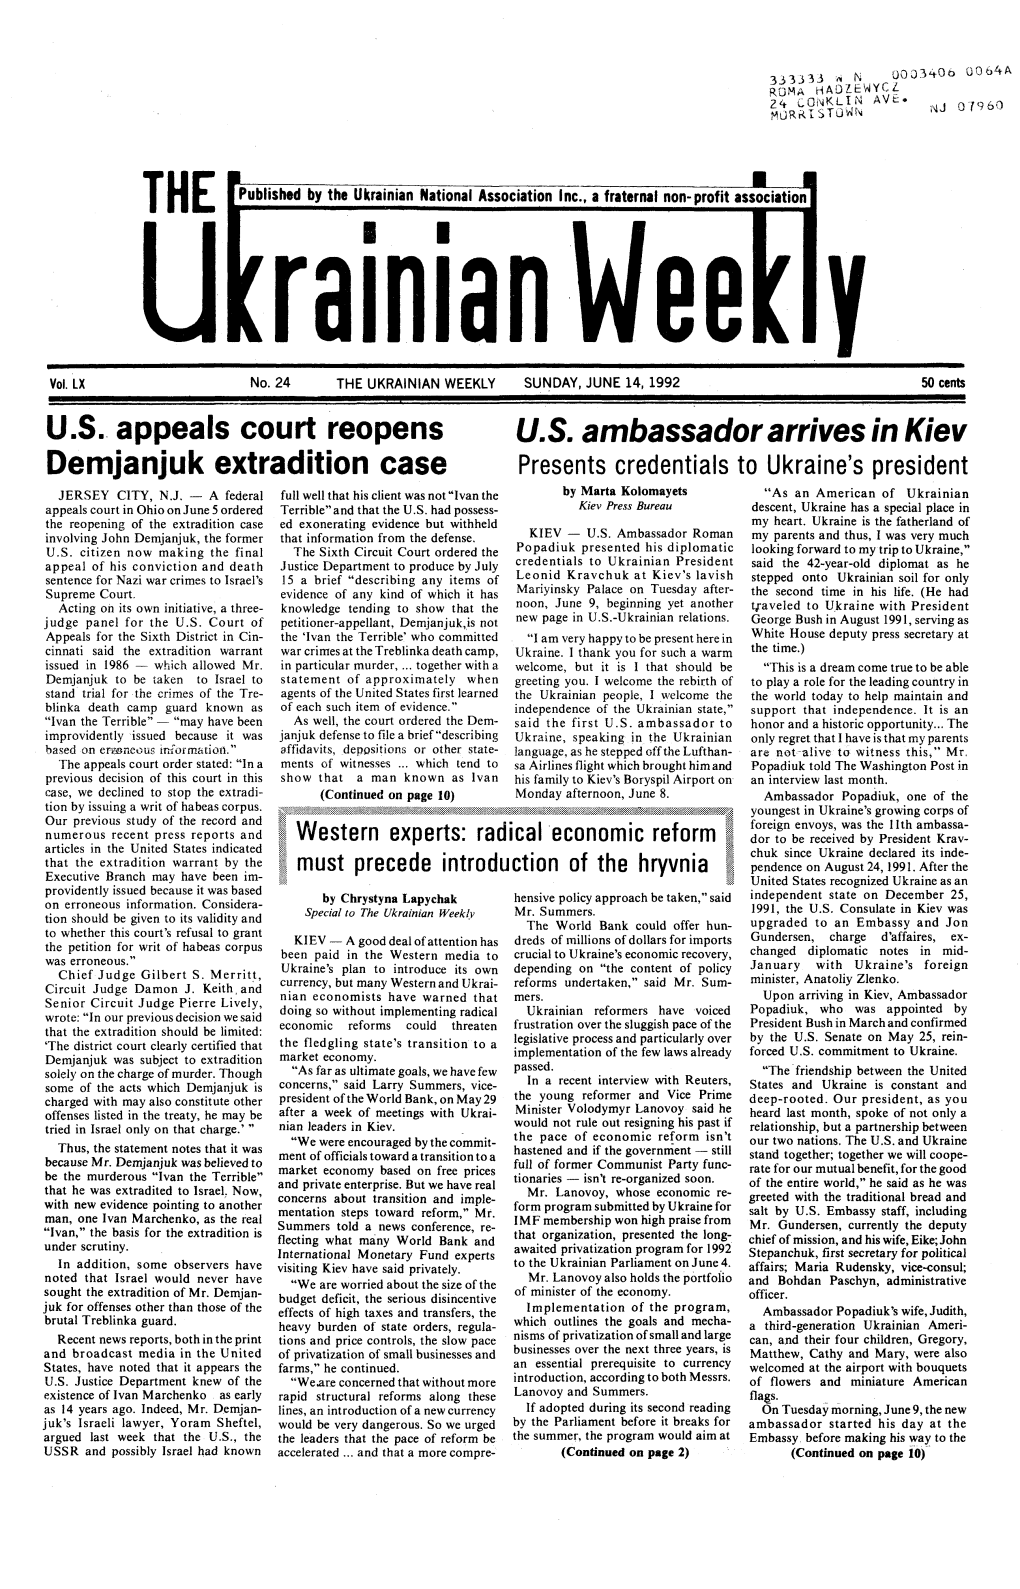 The Ukrainian Weekly 1992, No.24